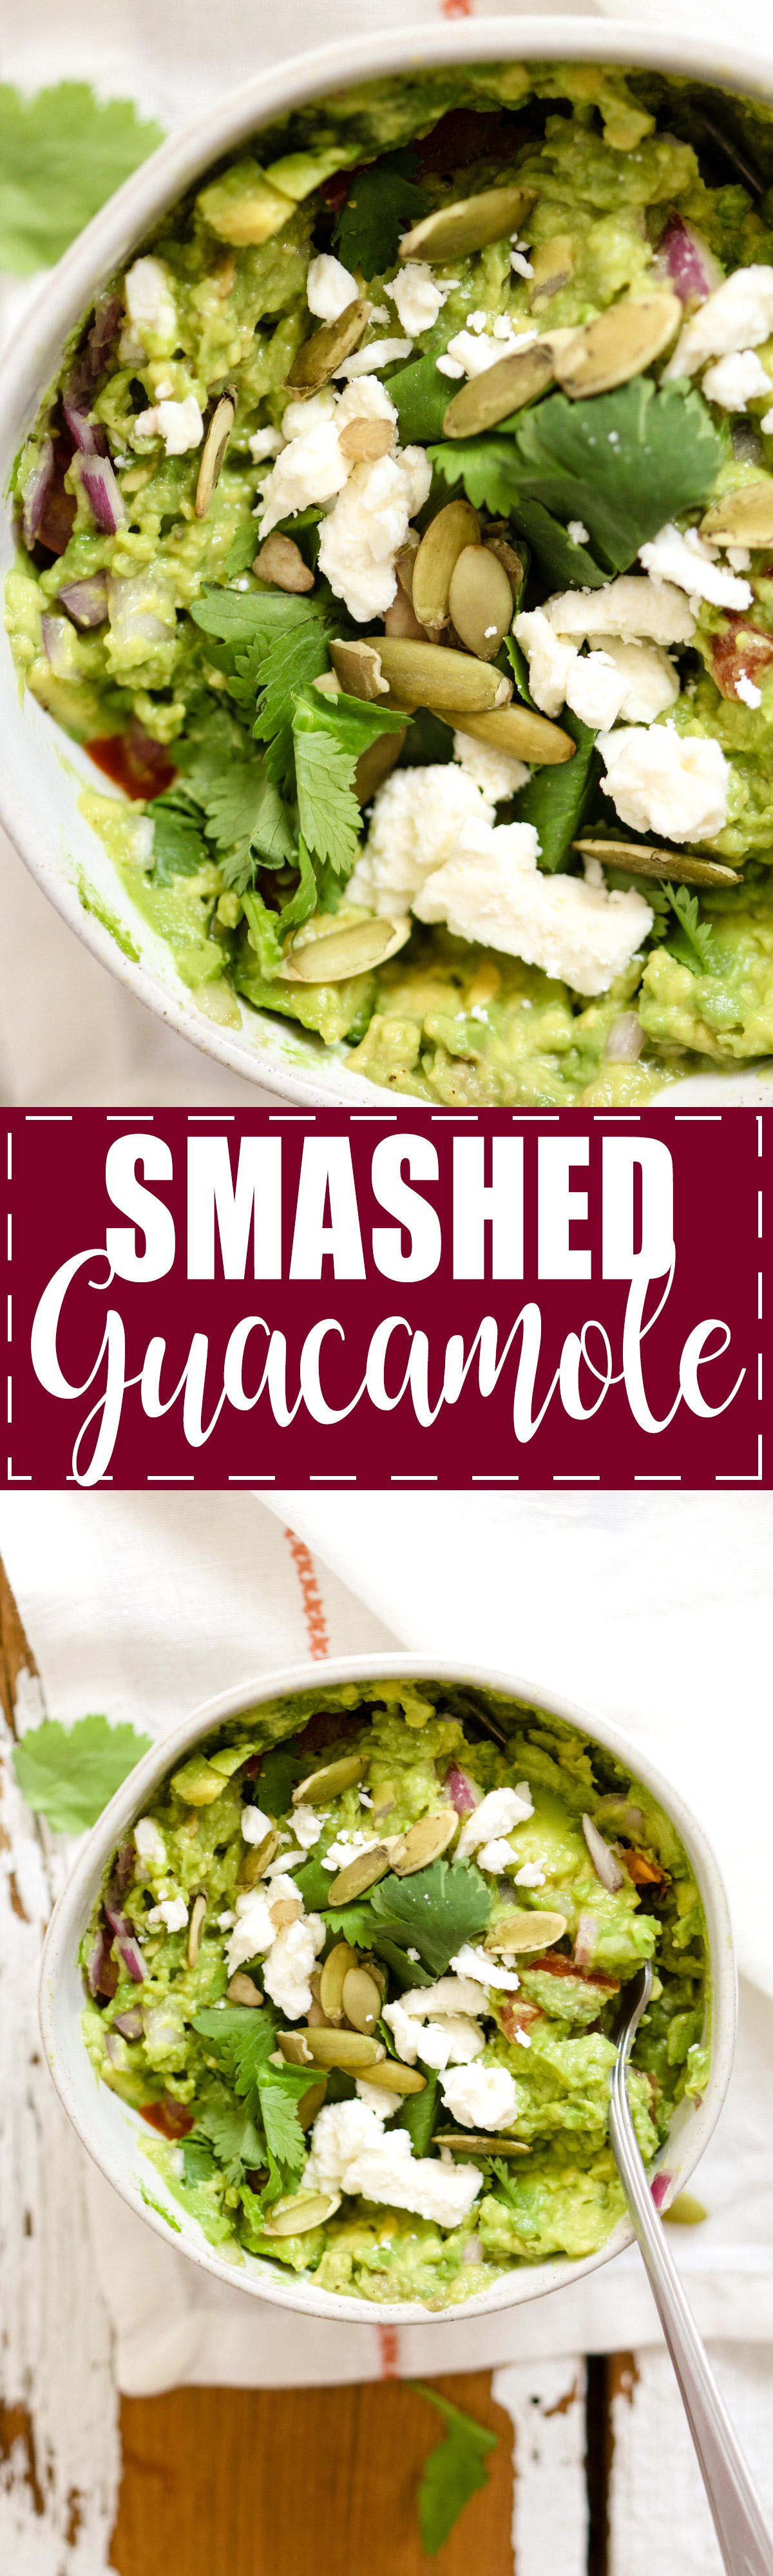 Crazy good smashed guacamole